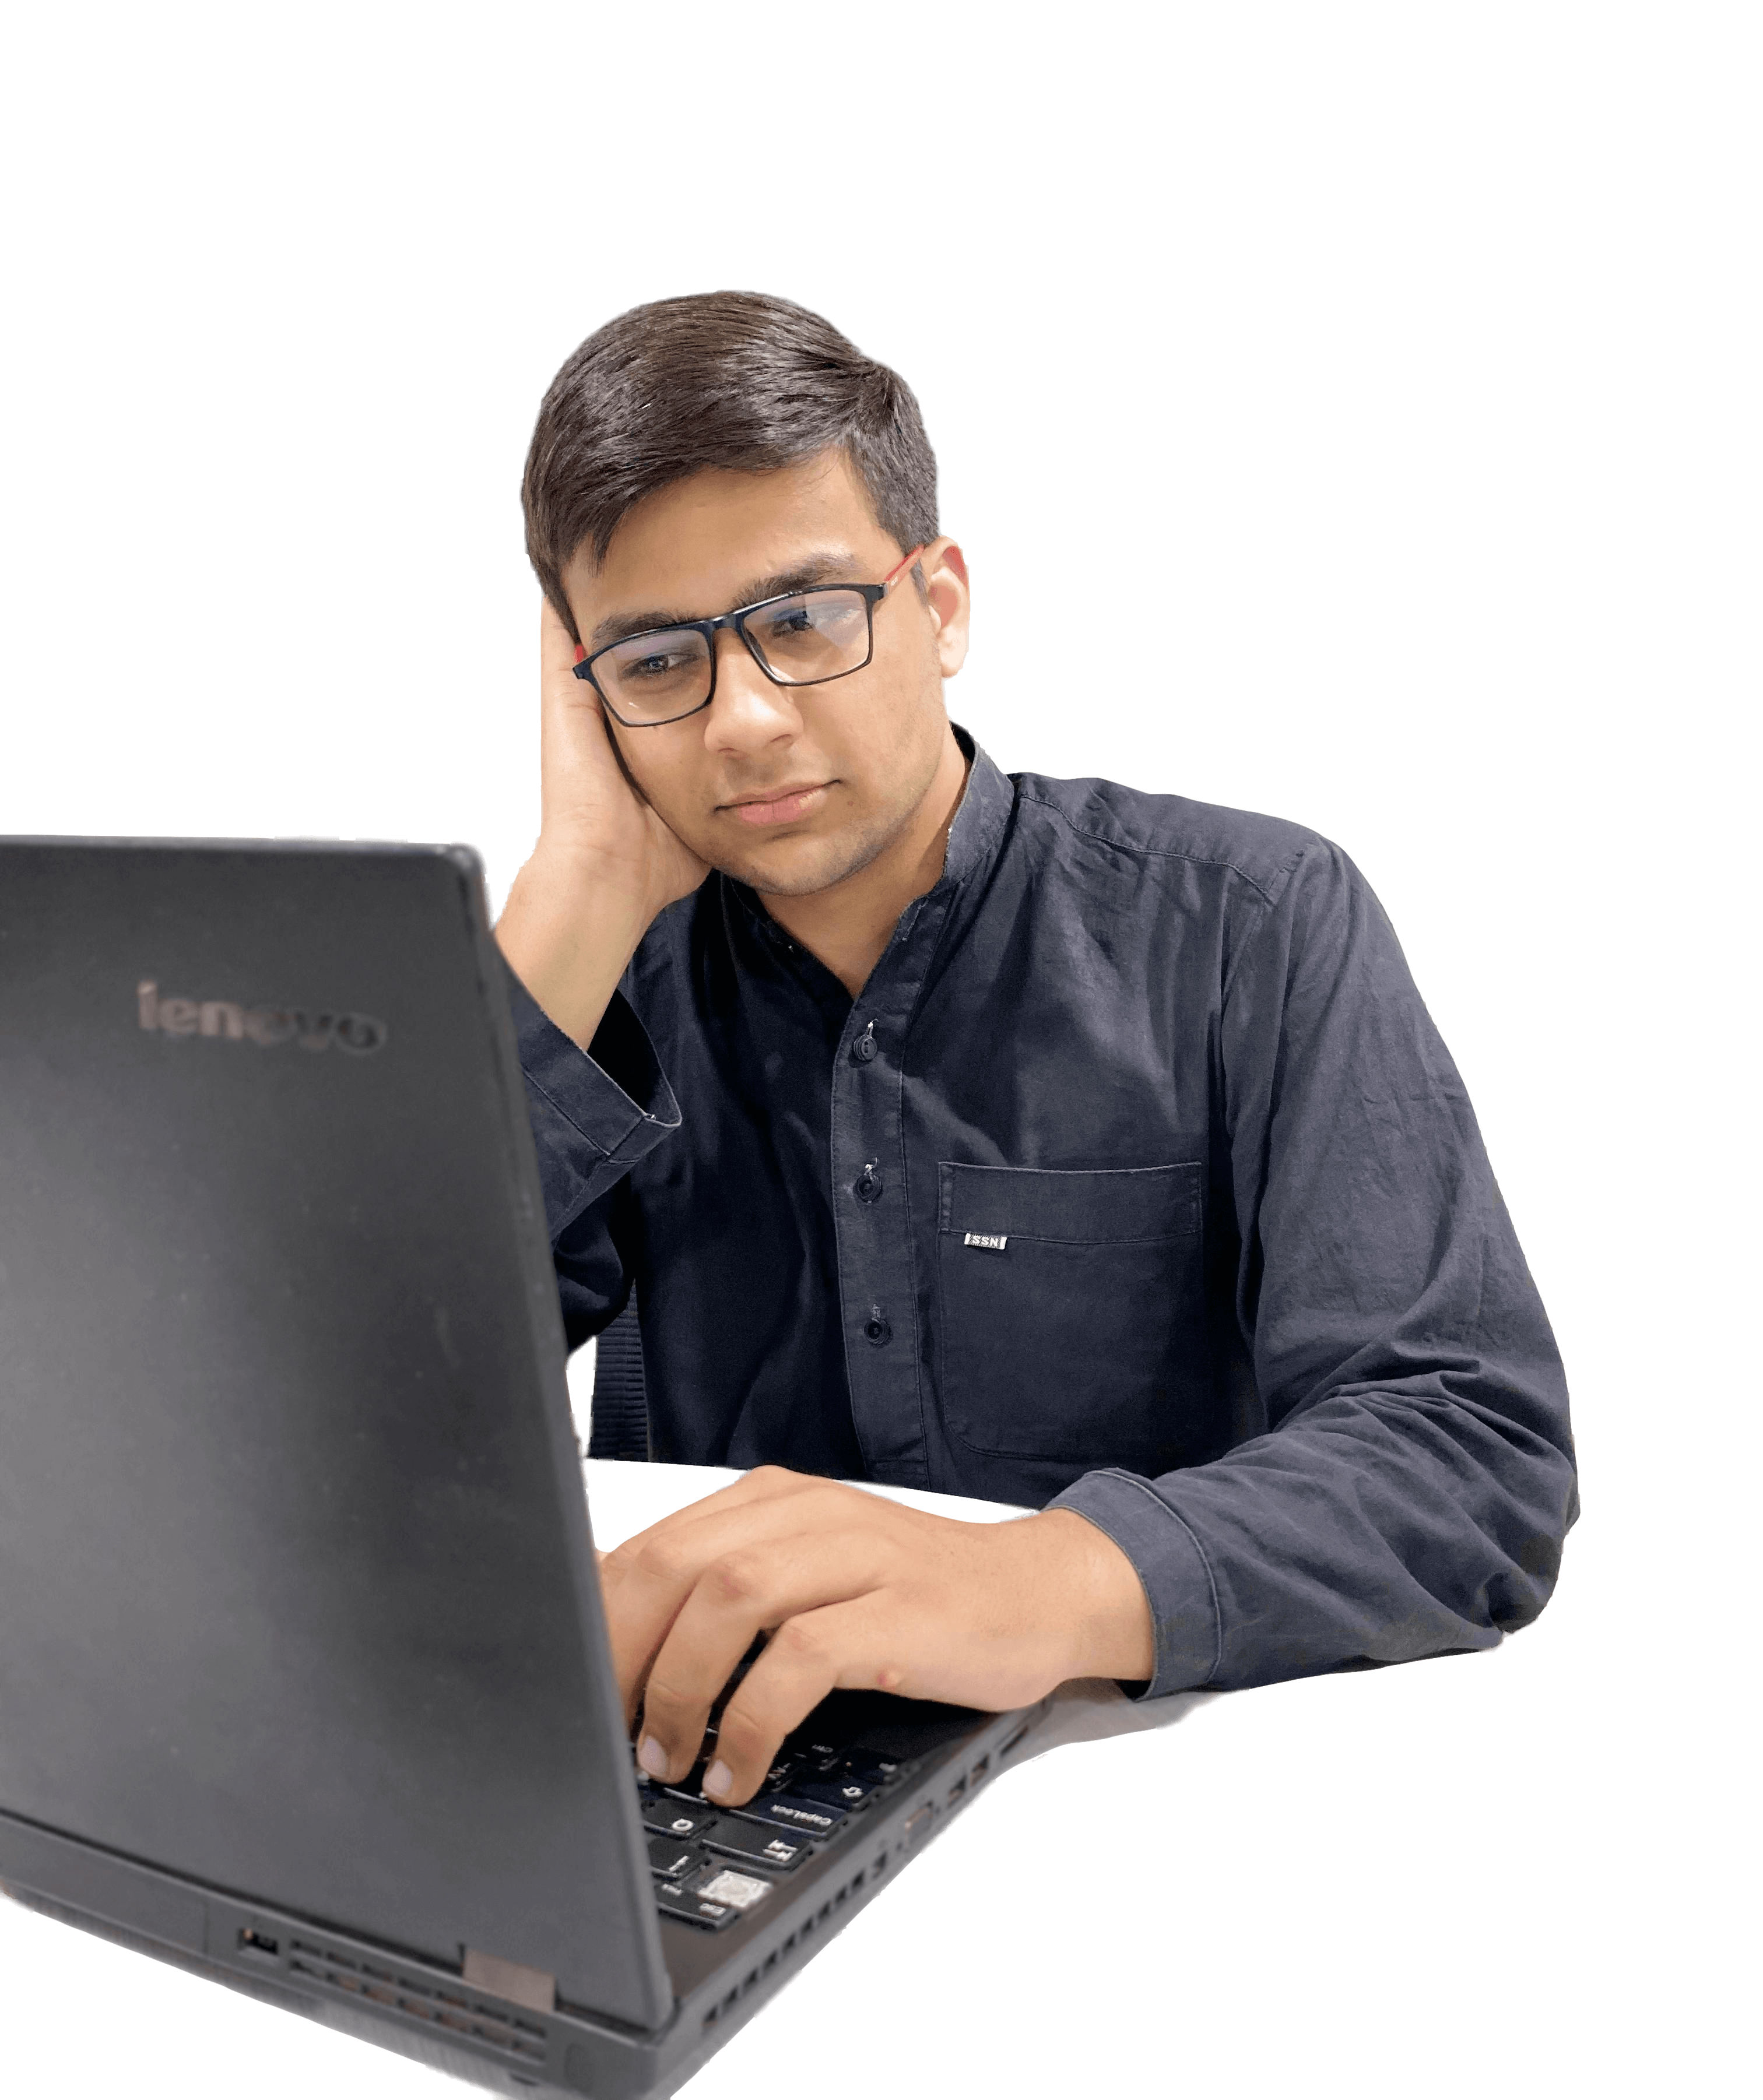 Muhammad Khan at work facing laptop